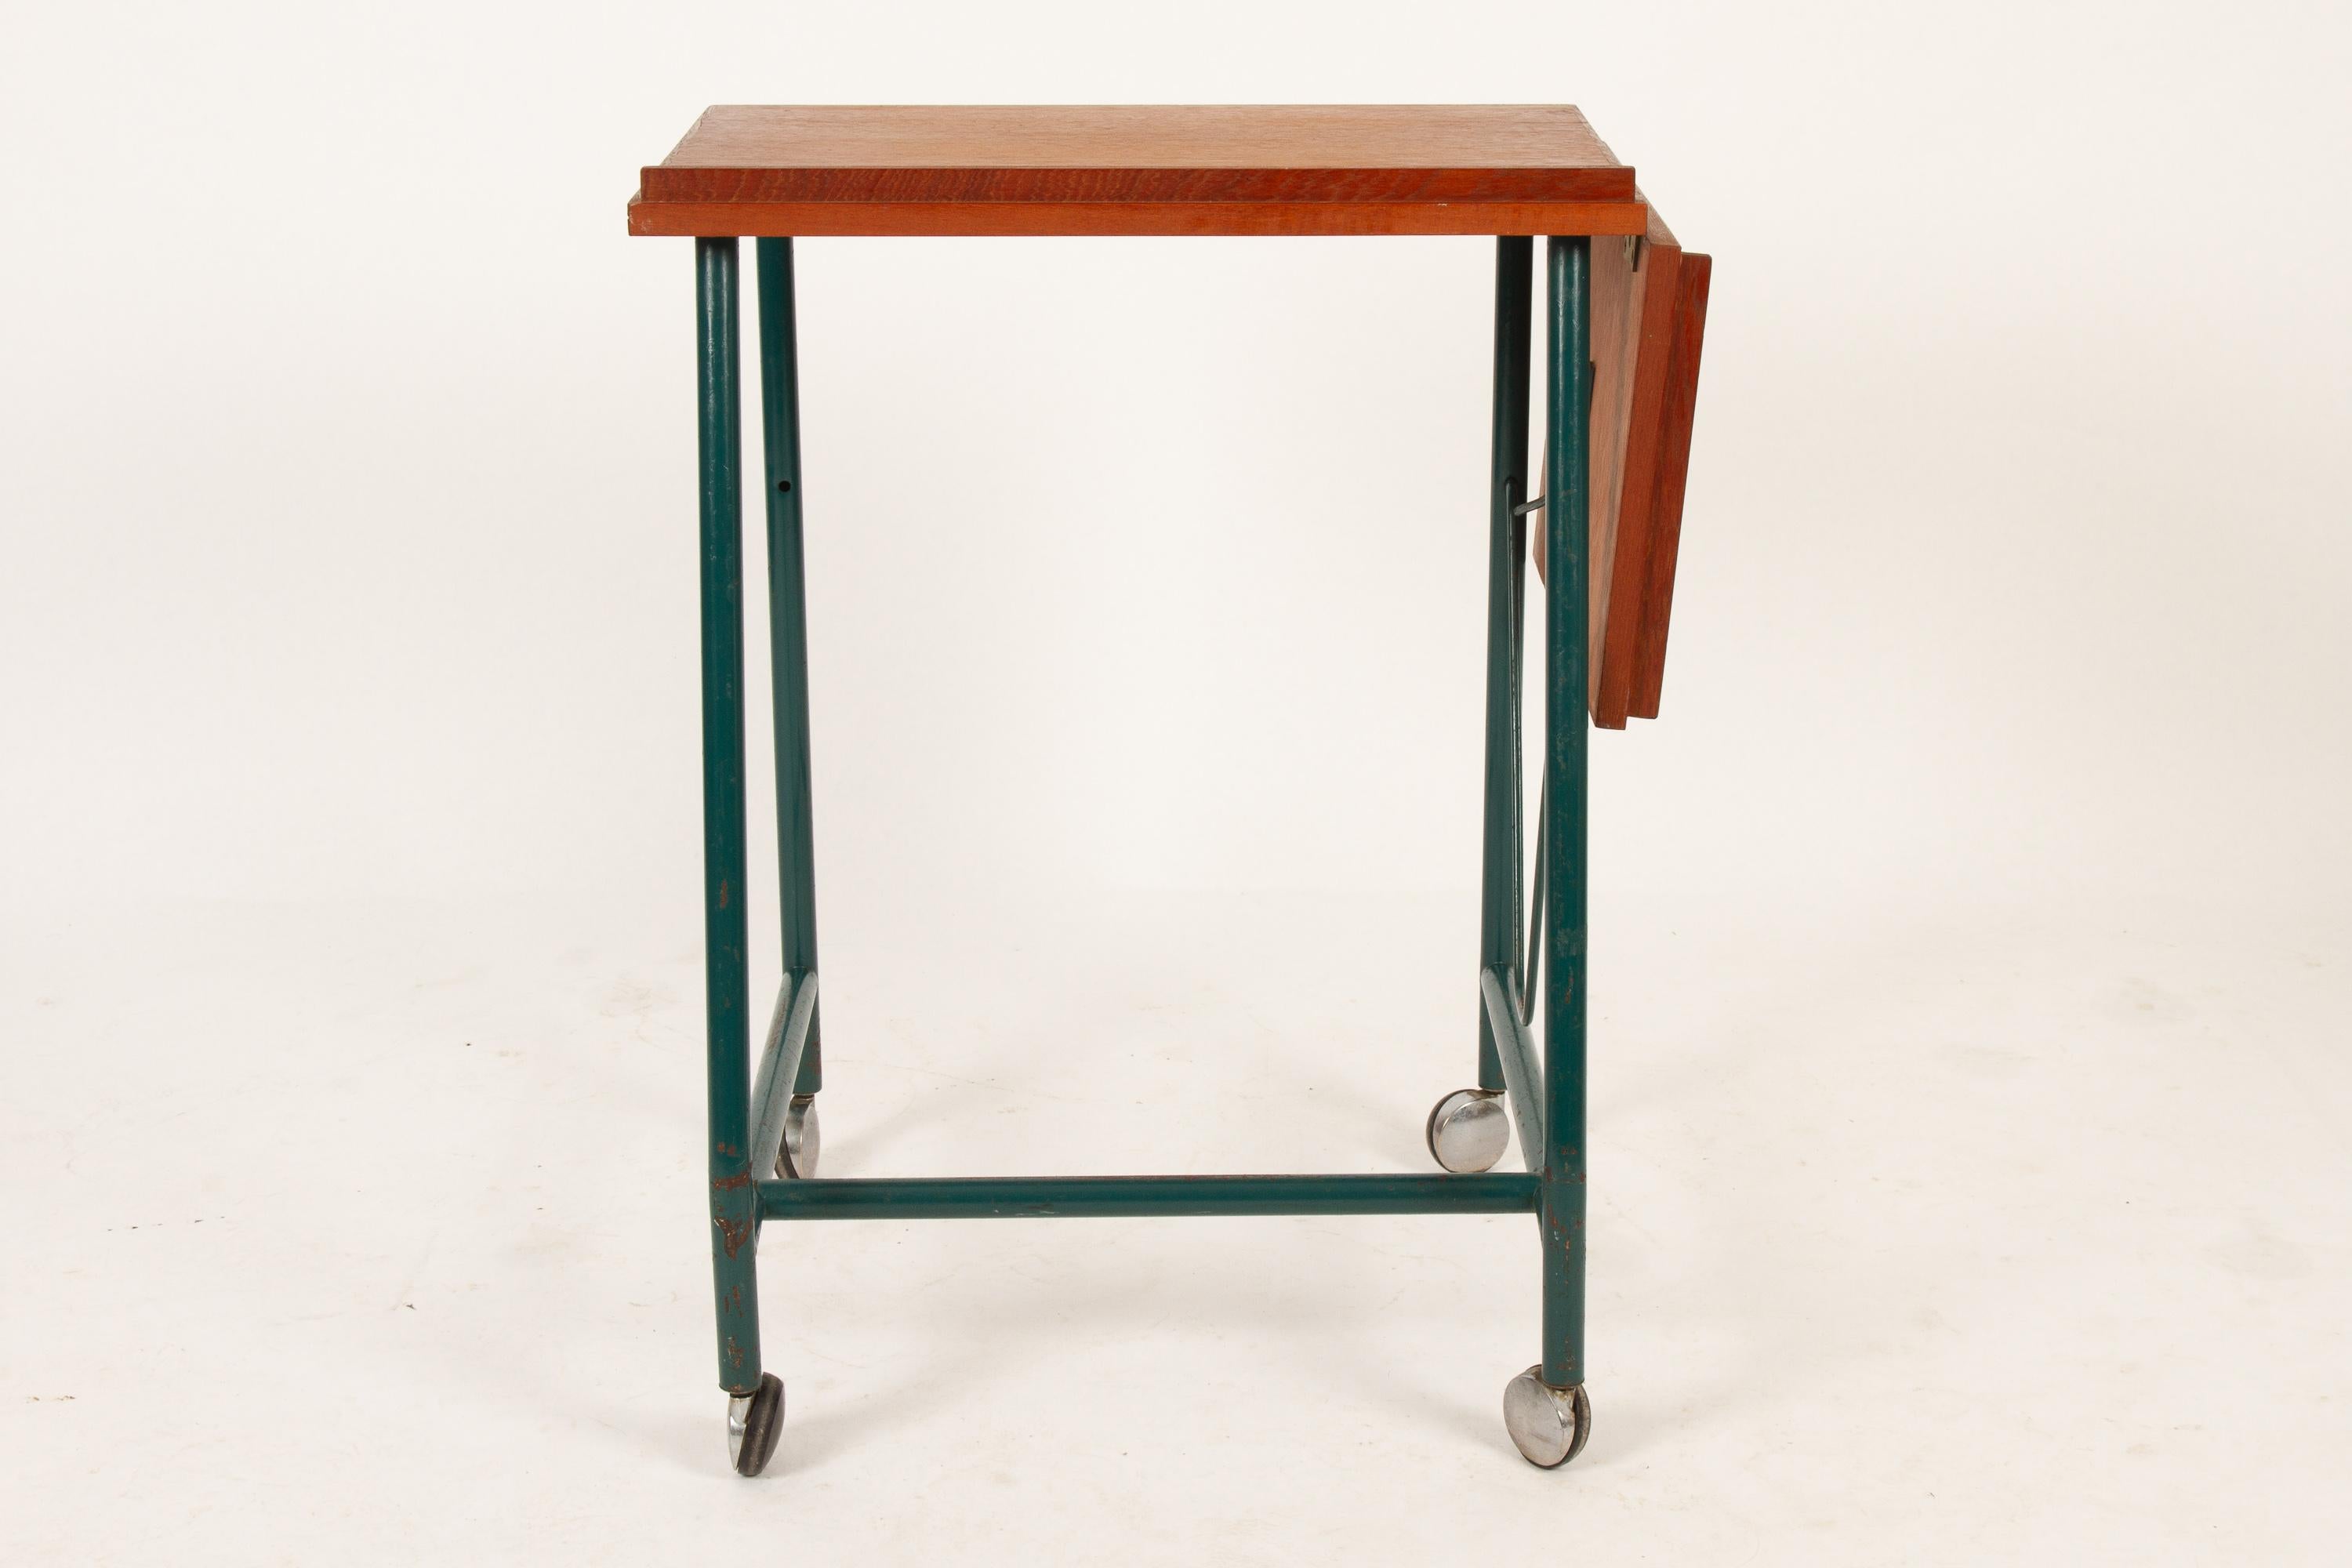 Danish Teak Side Table with Green Metal Frame, 1960s (Skandinavische Moderne)